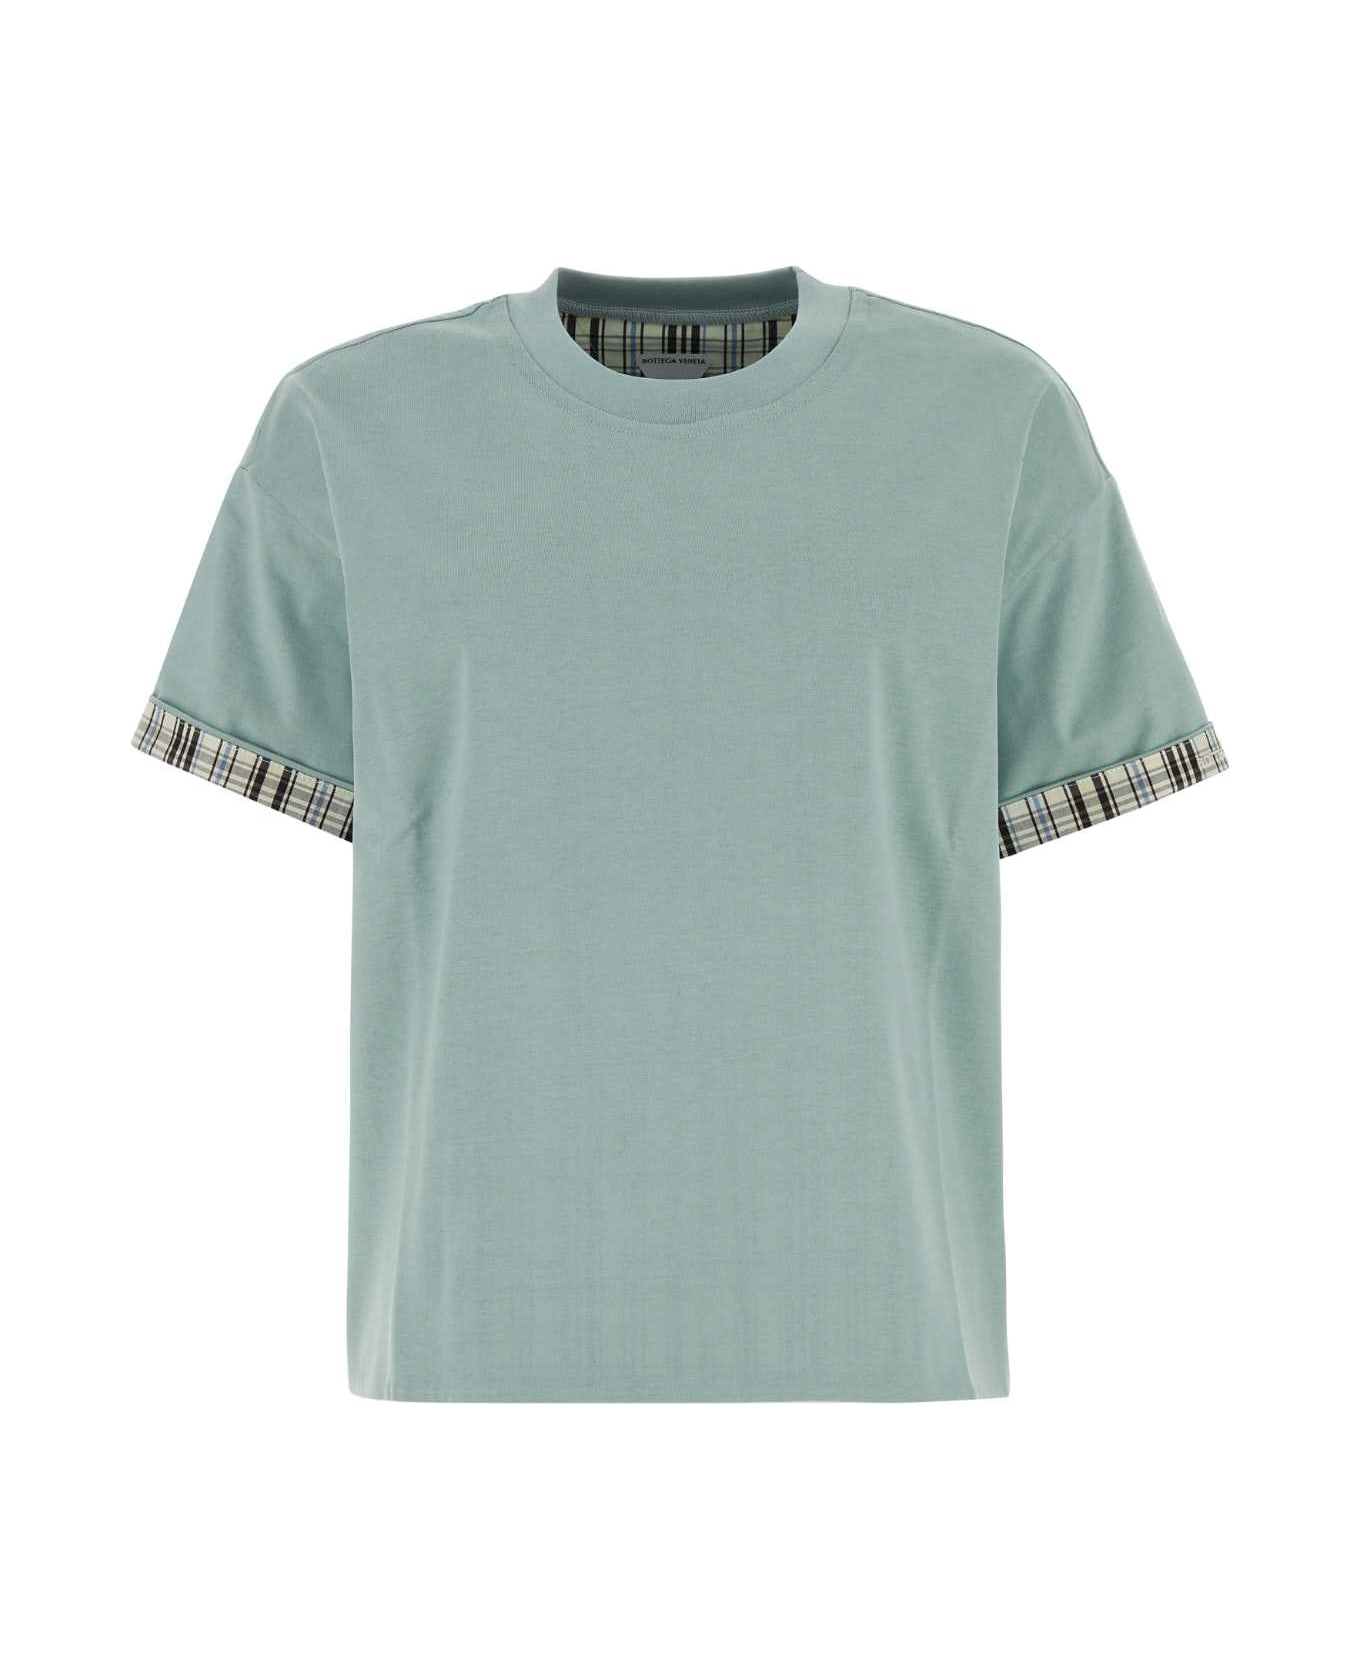 Bottega Veneta Powder Blue Cotton T-shirt - STEELBLUECHALKFOND Tシャツ